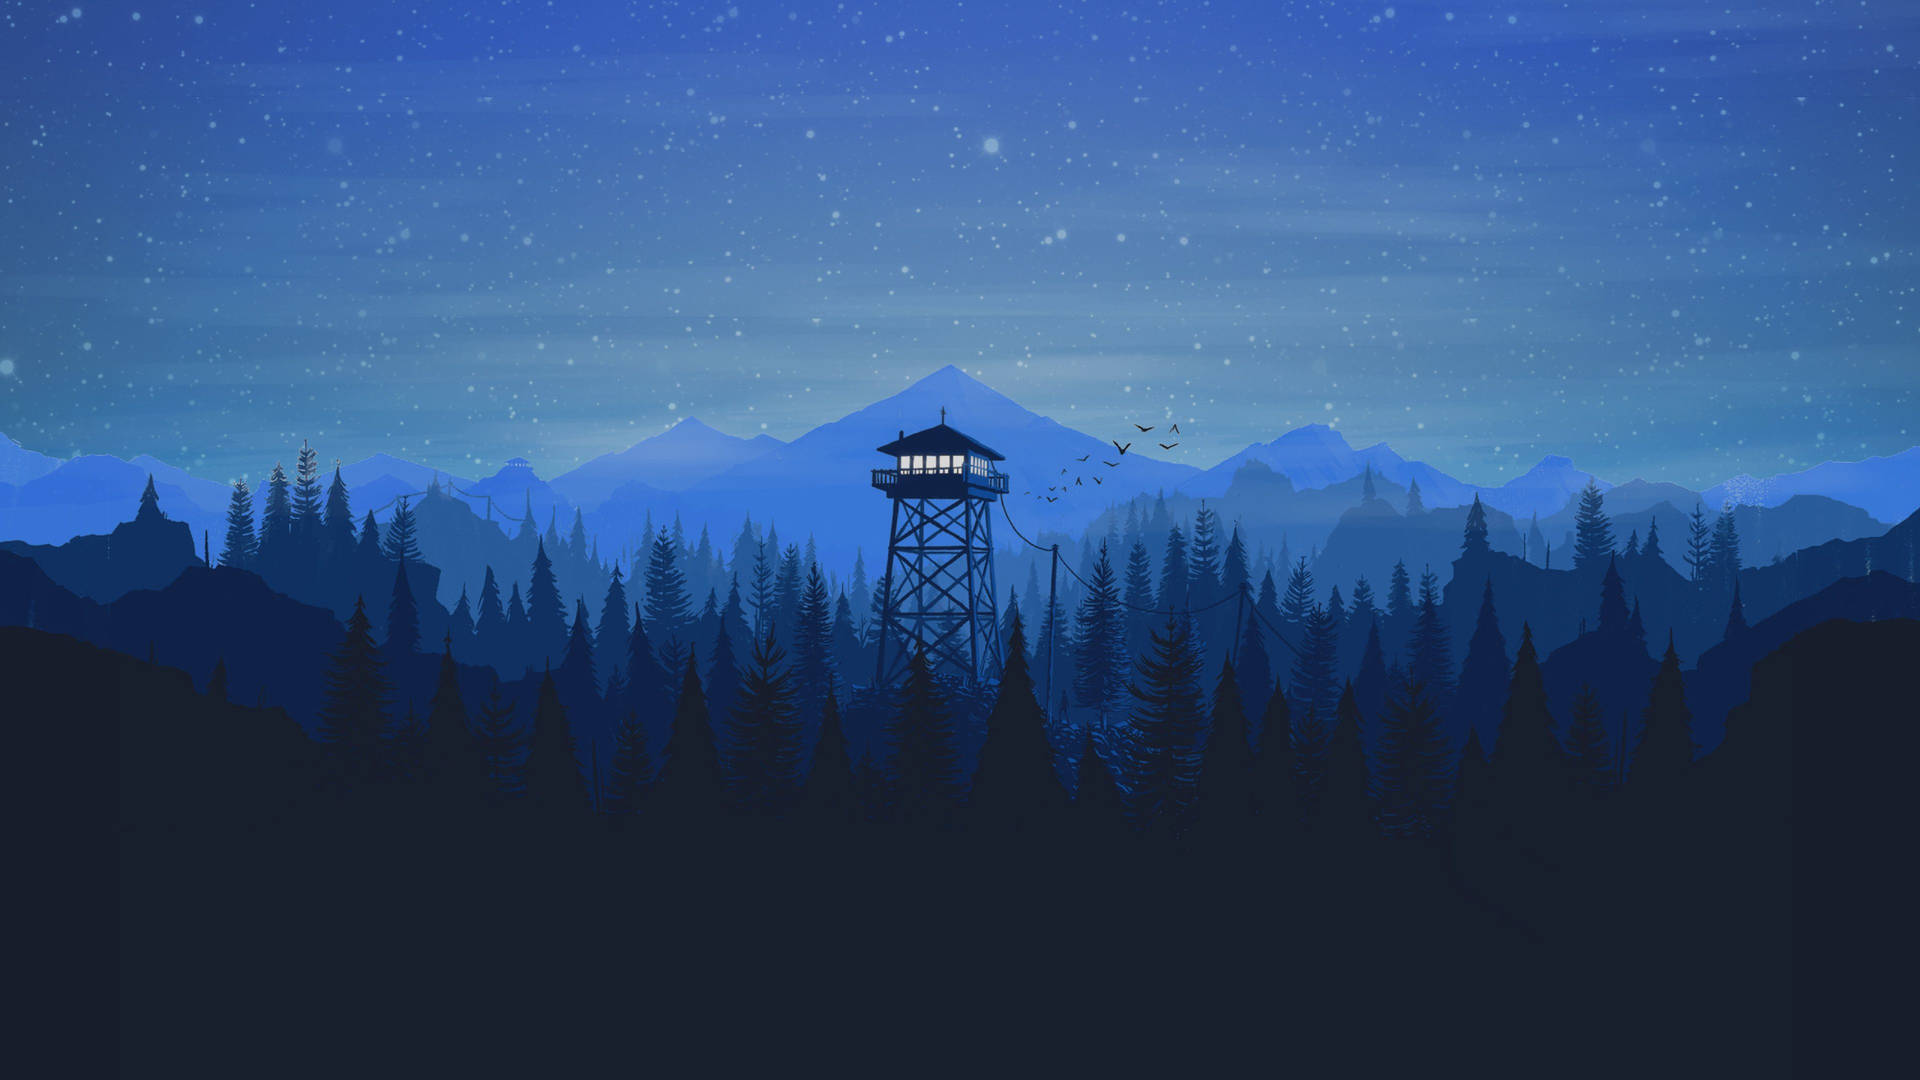 4k Firewatch Starry Night Sky Background